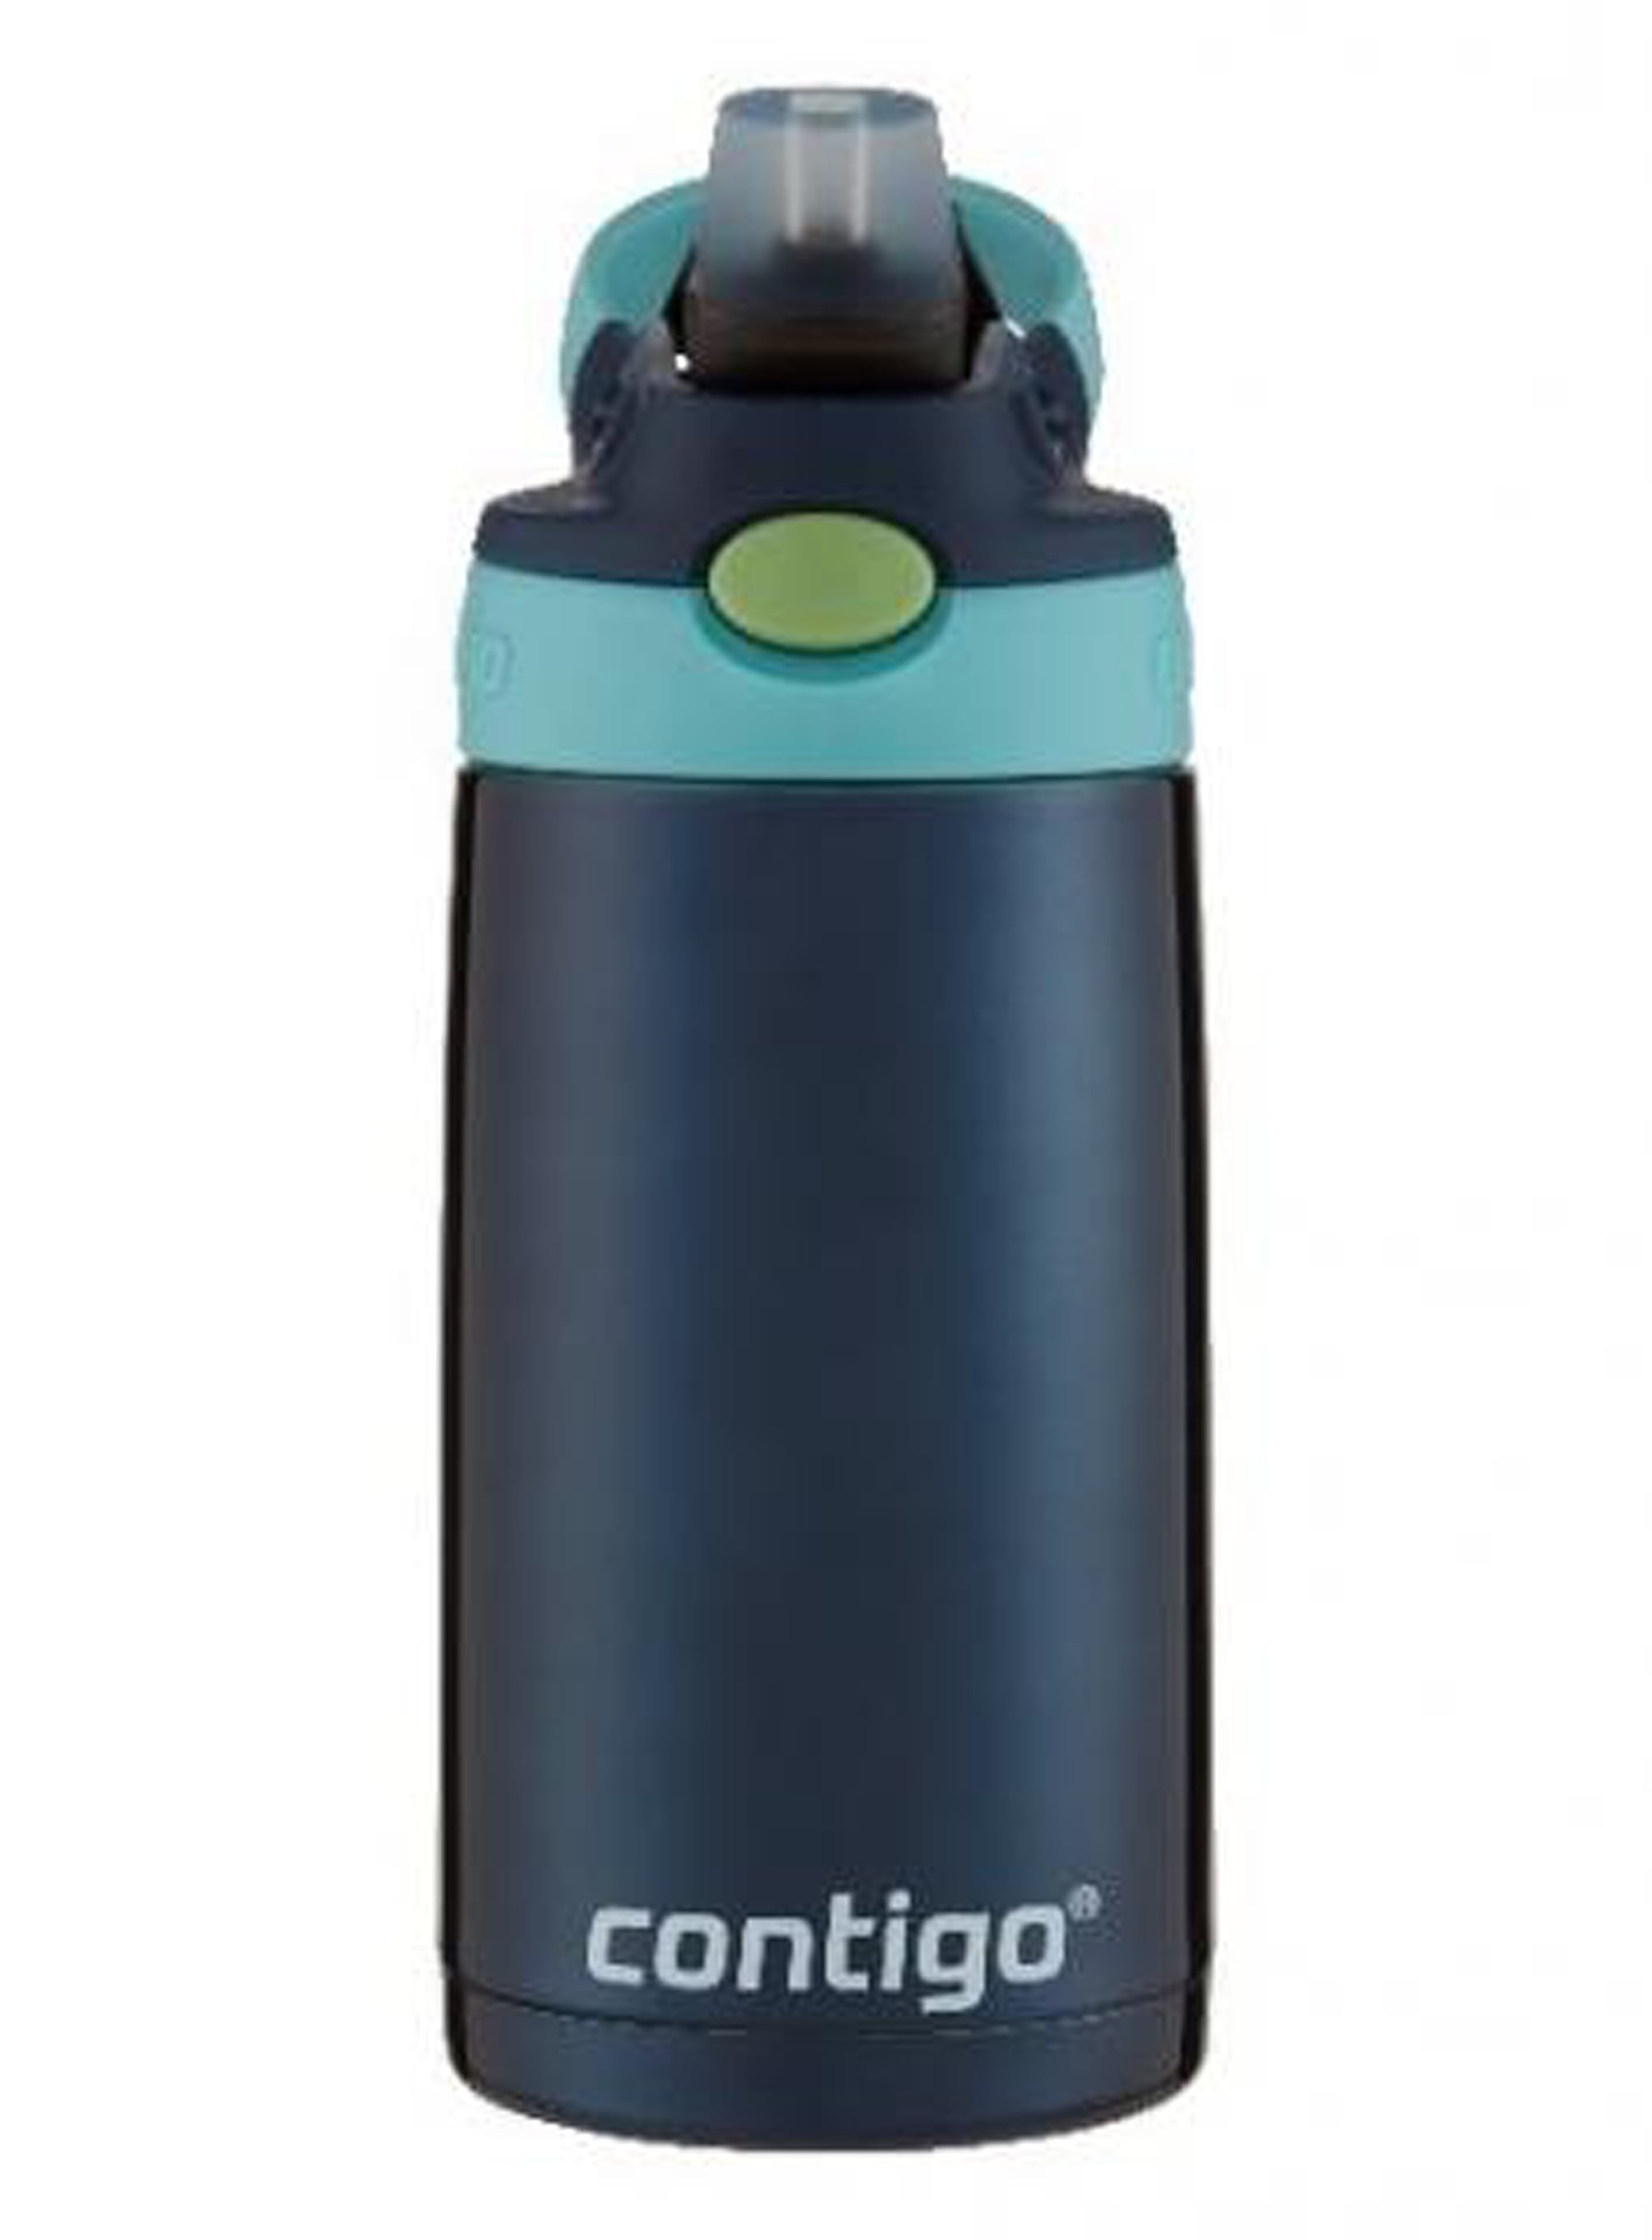 Contigo Kids' Cleanable Water Bottles Recall February 2020